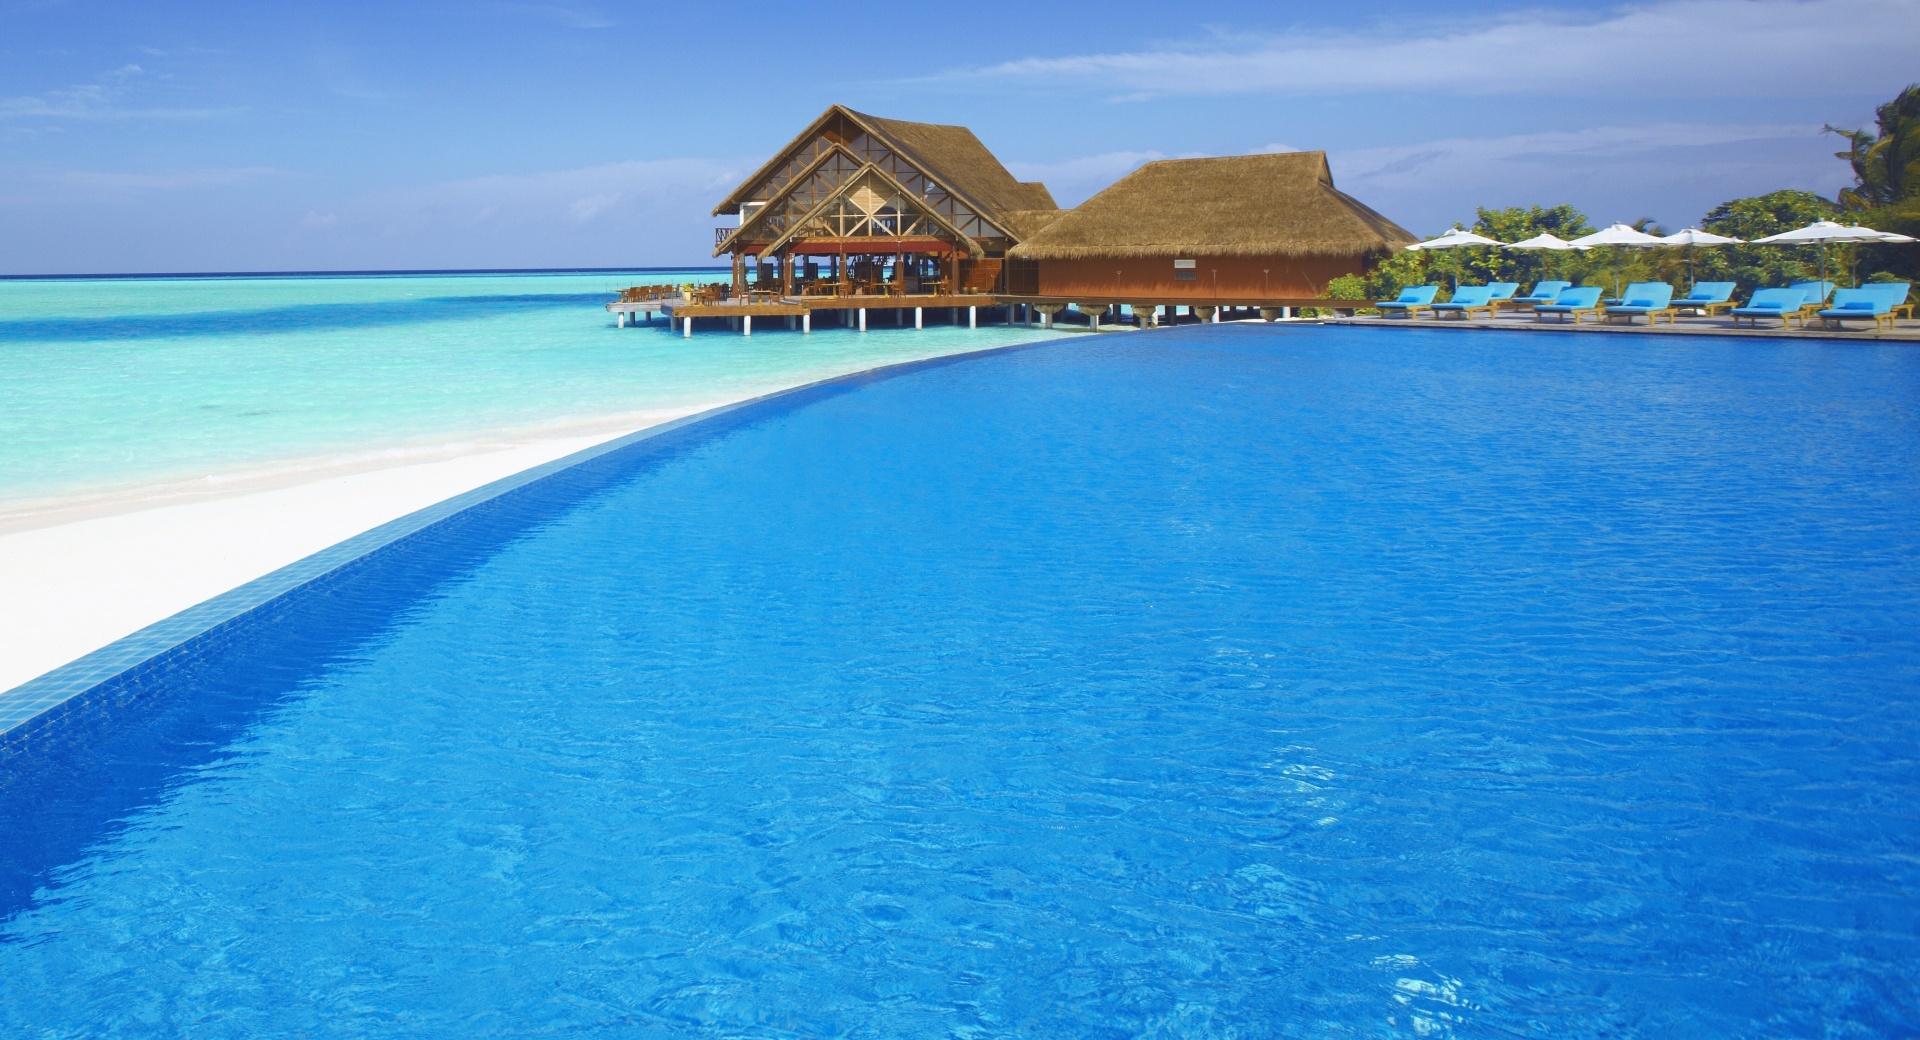 Resort Swimming Pool at 1024 x 1024 iPad size wallpapers HD quality